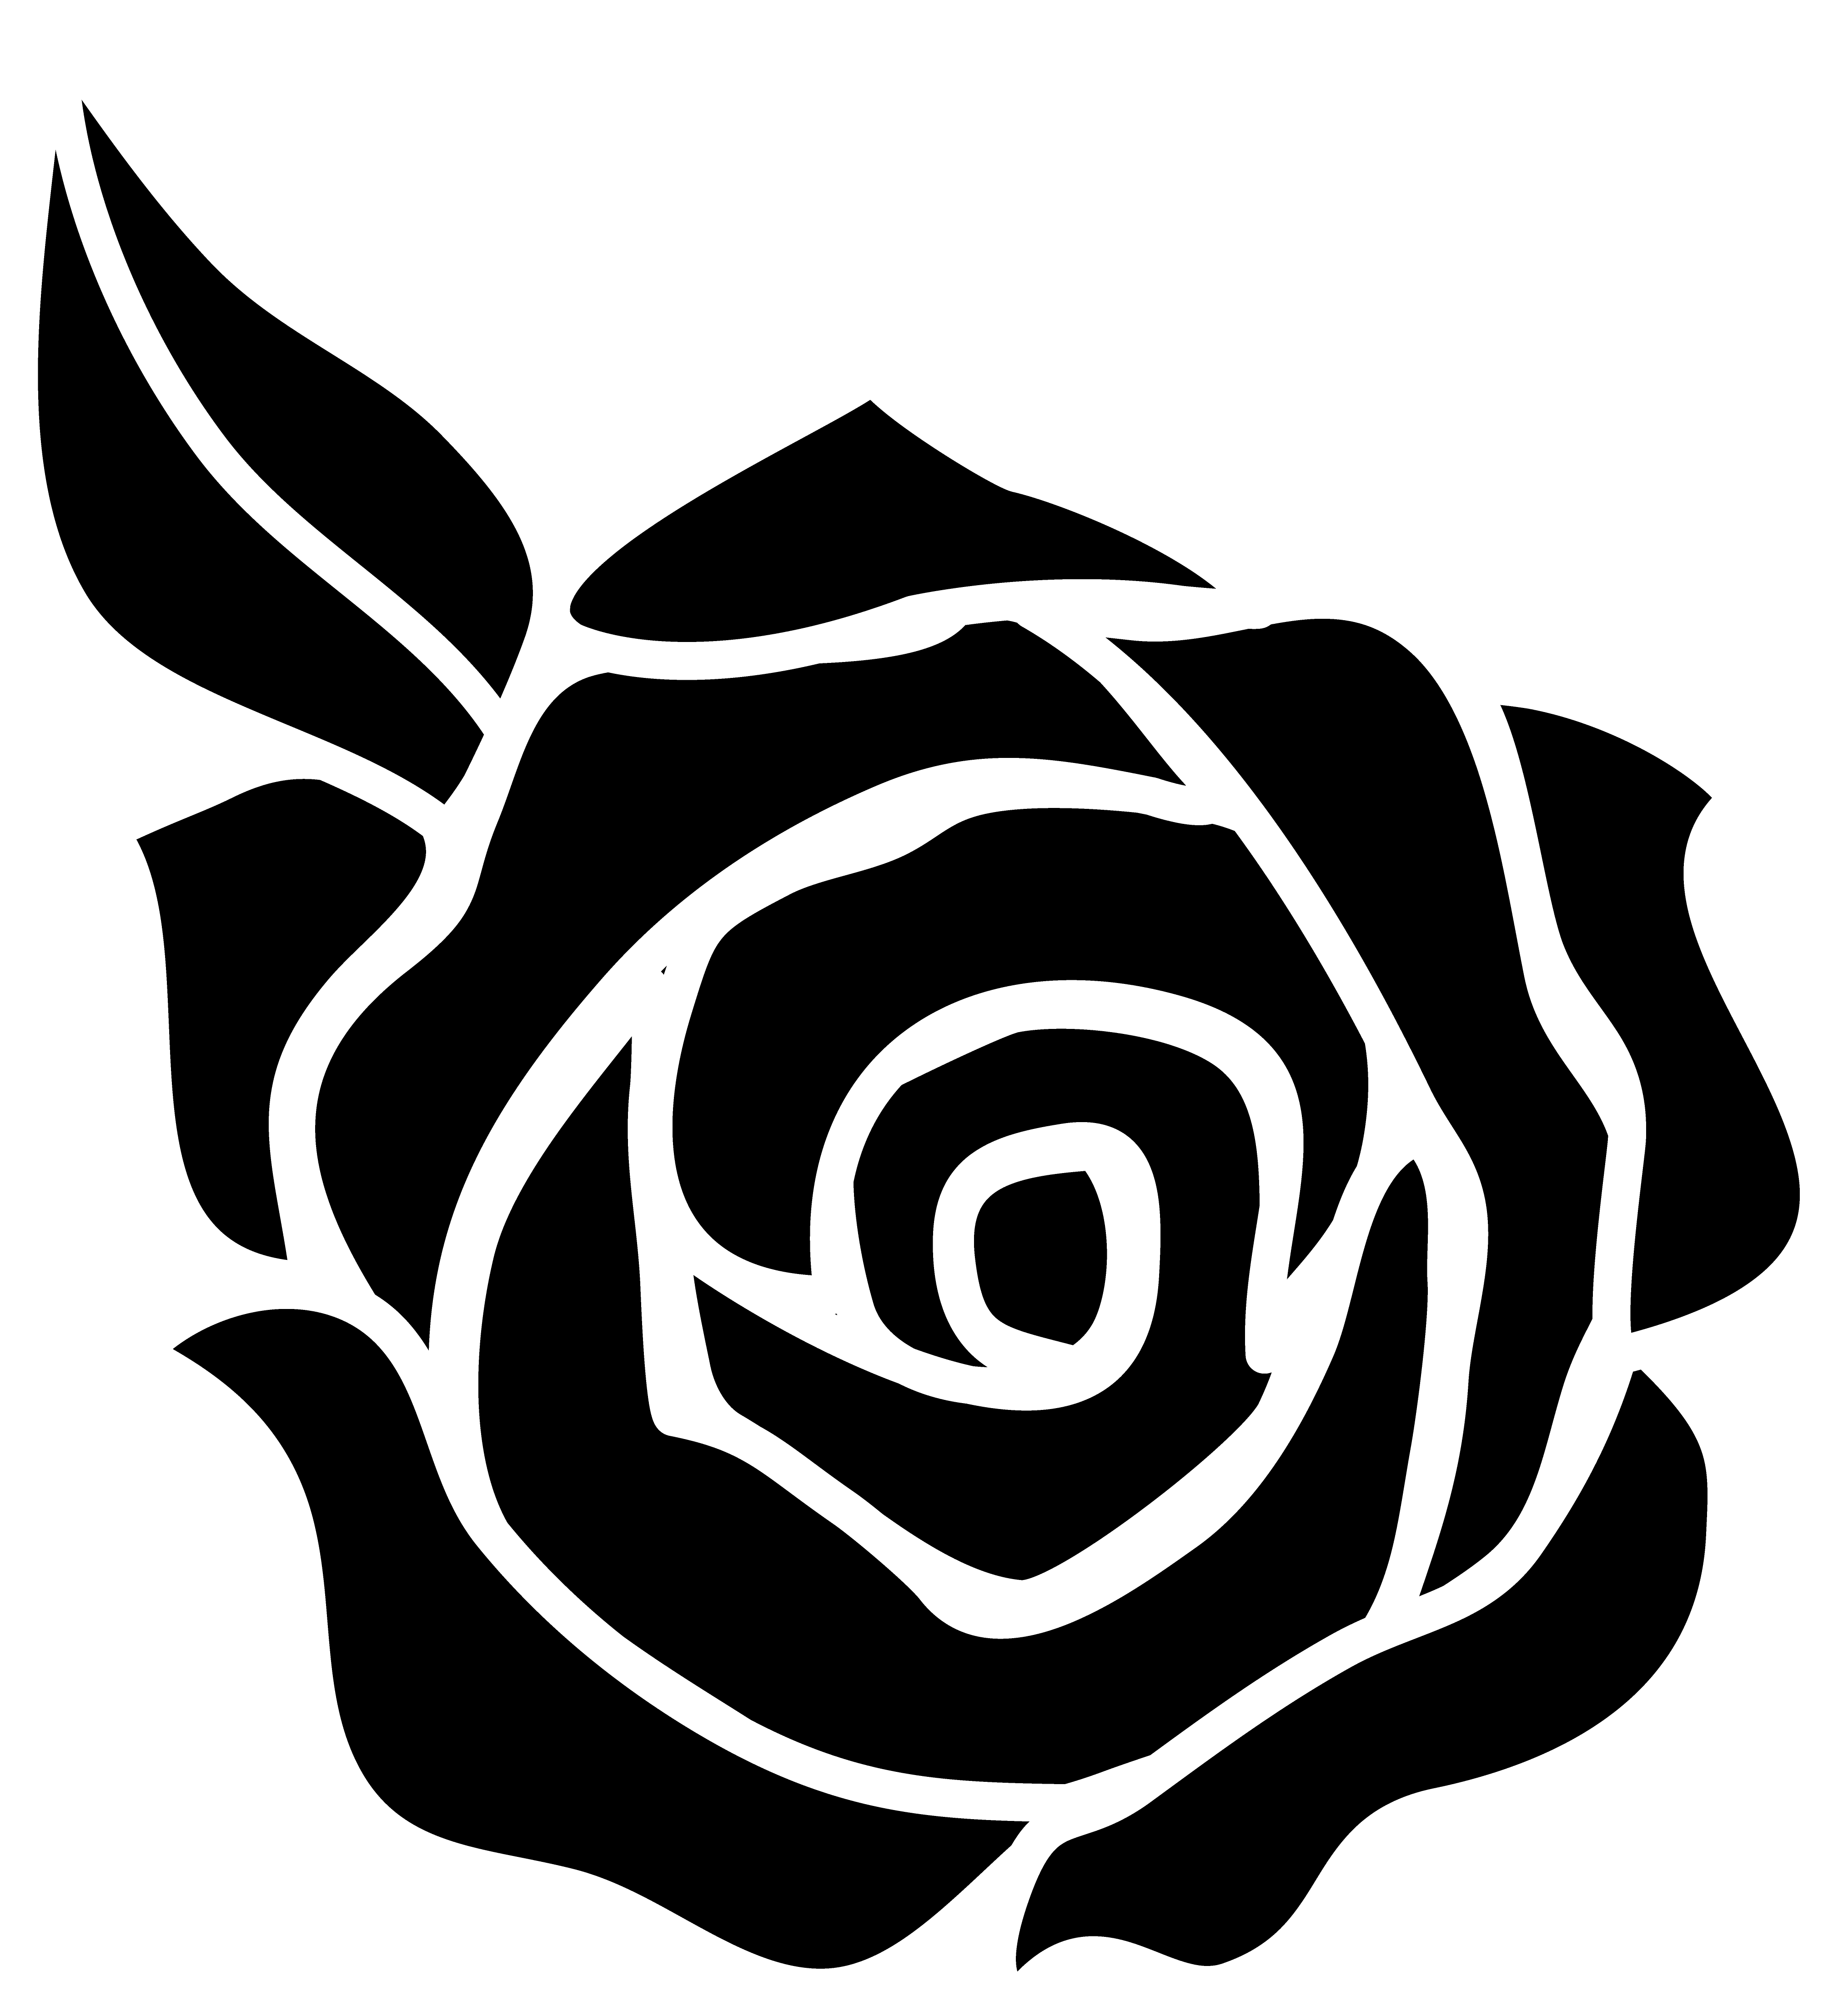 Black Rose Silhouette Design Free Clip Art - Trending Image